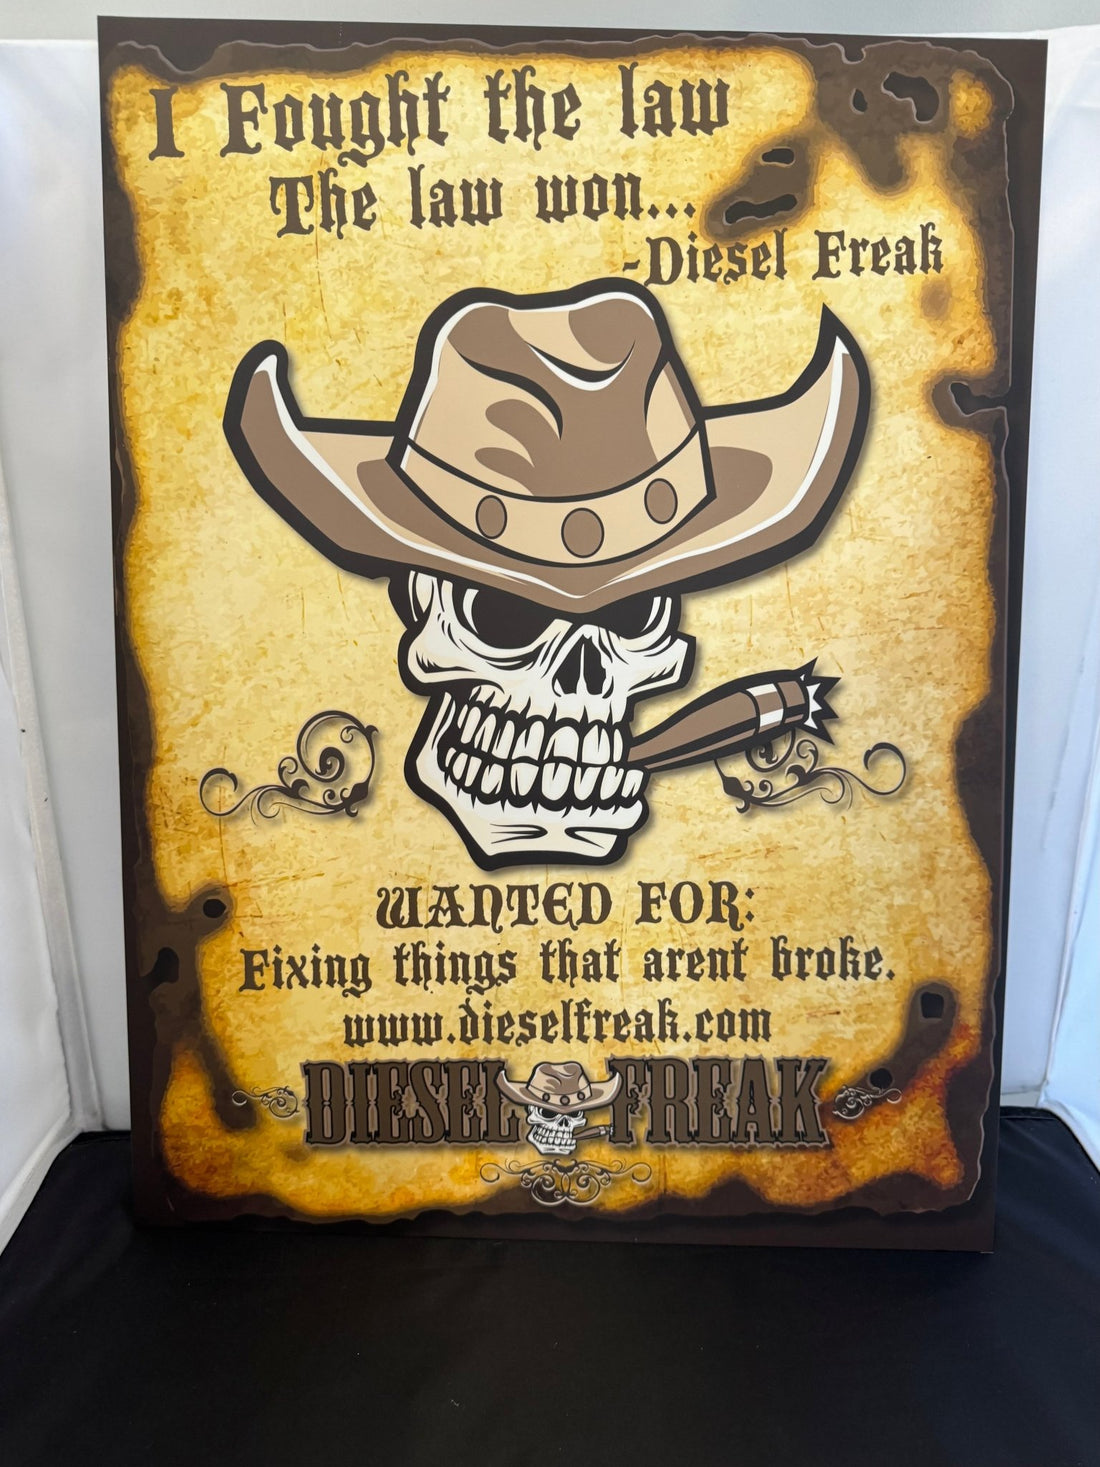 Fought The Law Metal Sign - Diesel Freak